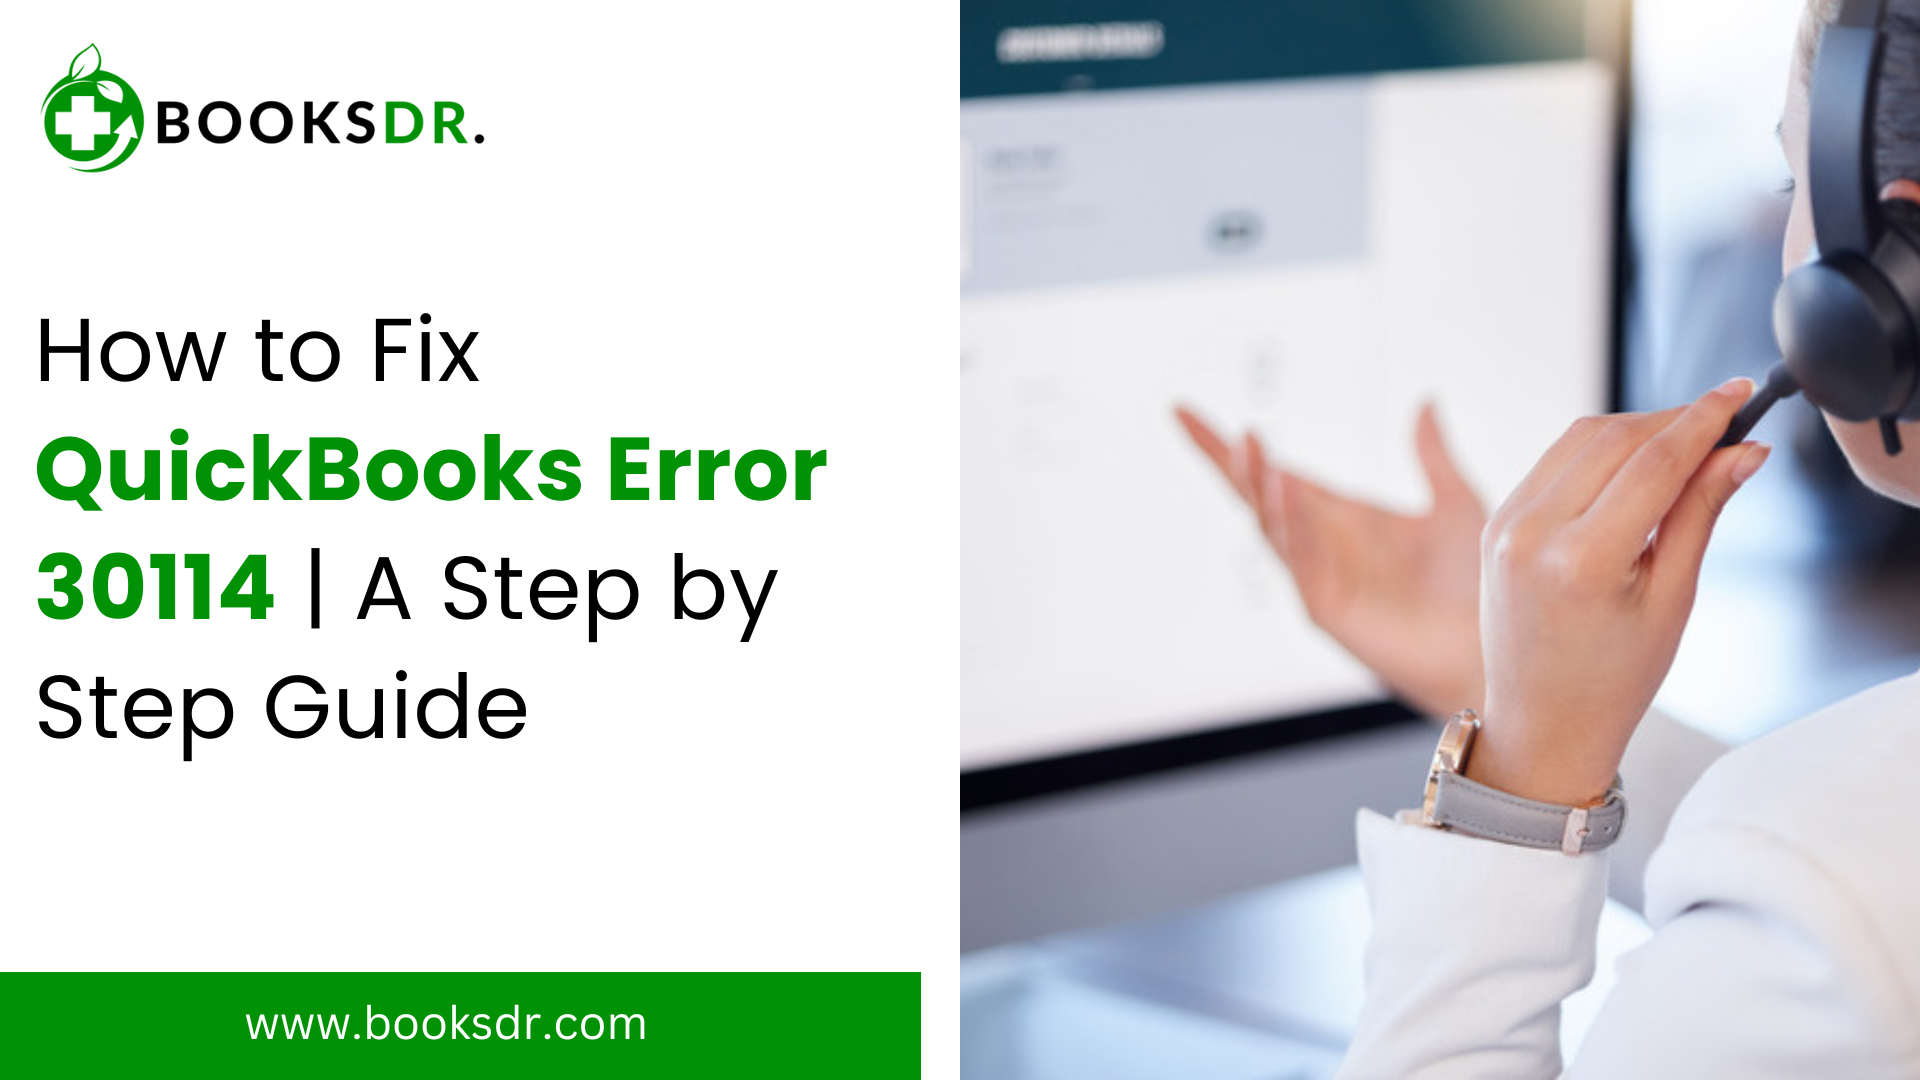 How to Fix QuickBooks Error 30114